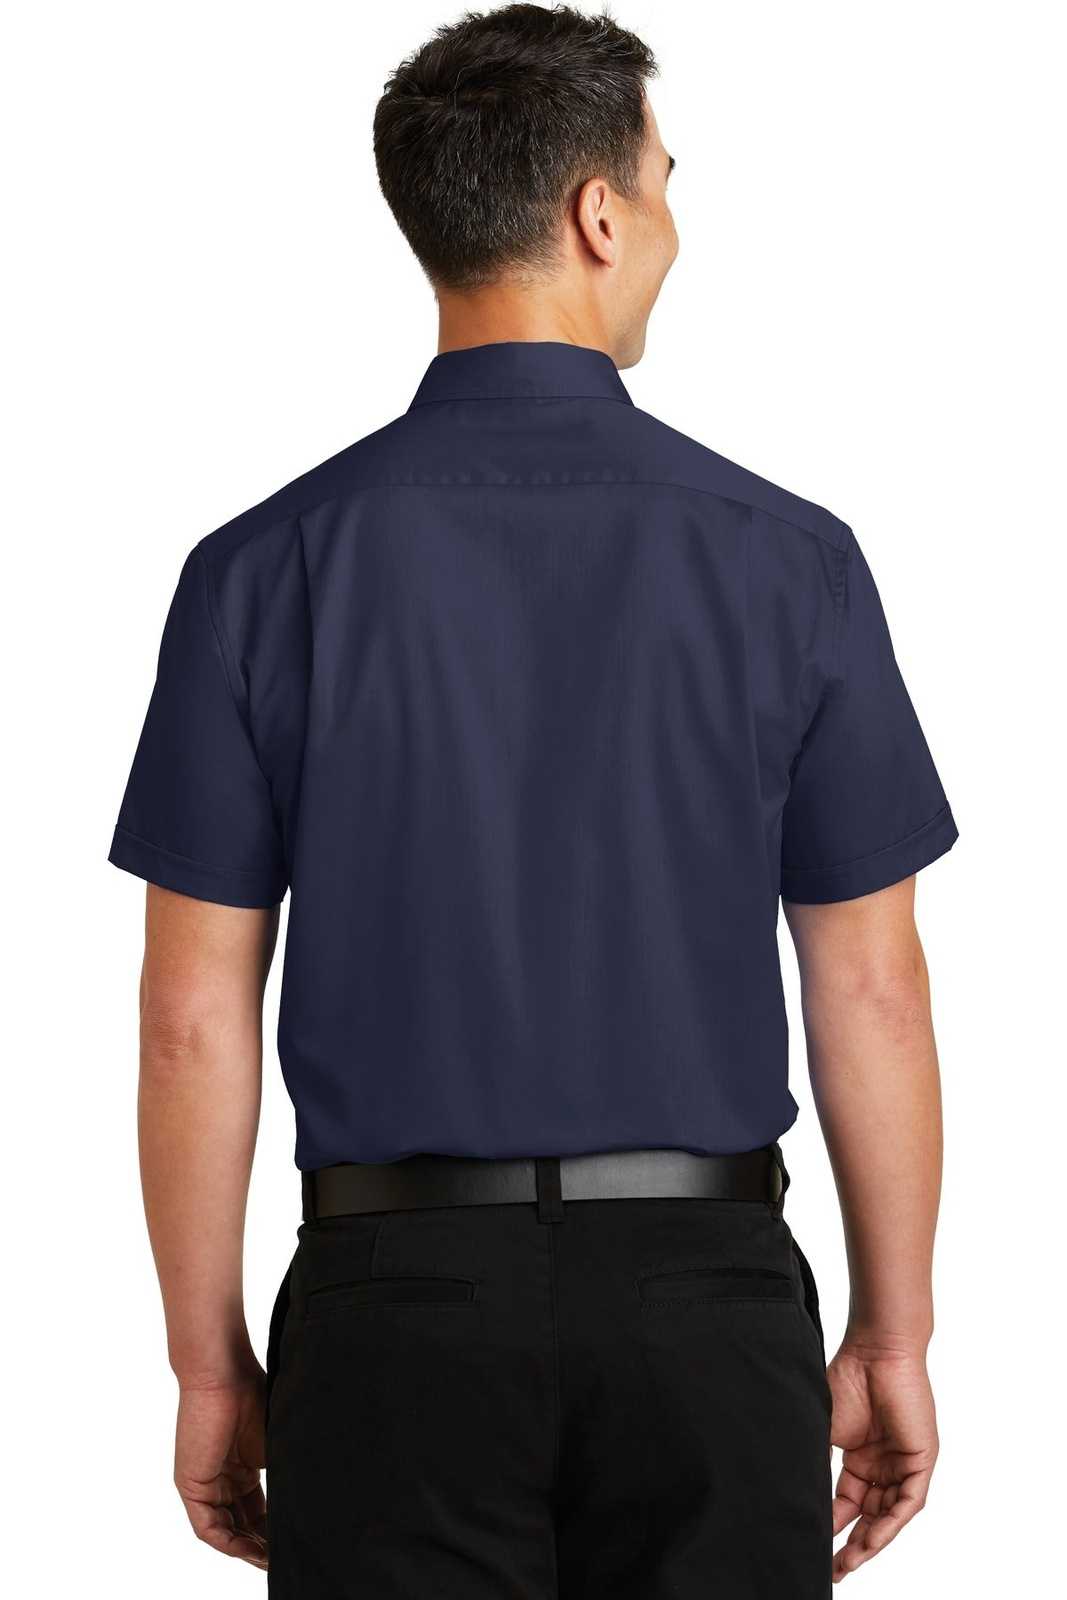 Port Authority S664 Short Sleeve Superpro Twill Shirt - True Navy - HIT a Double - 1